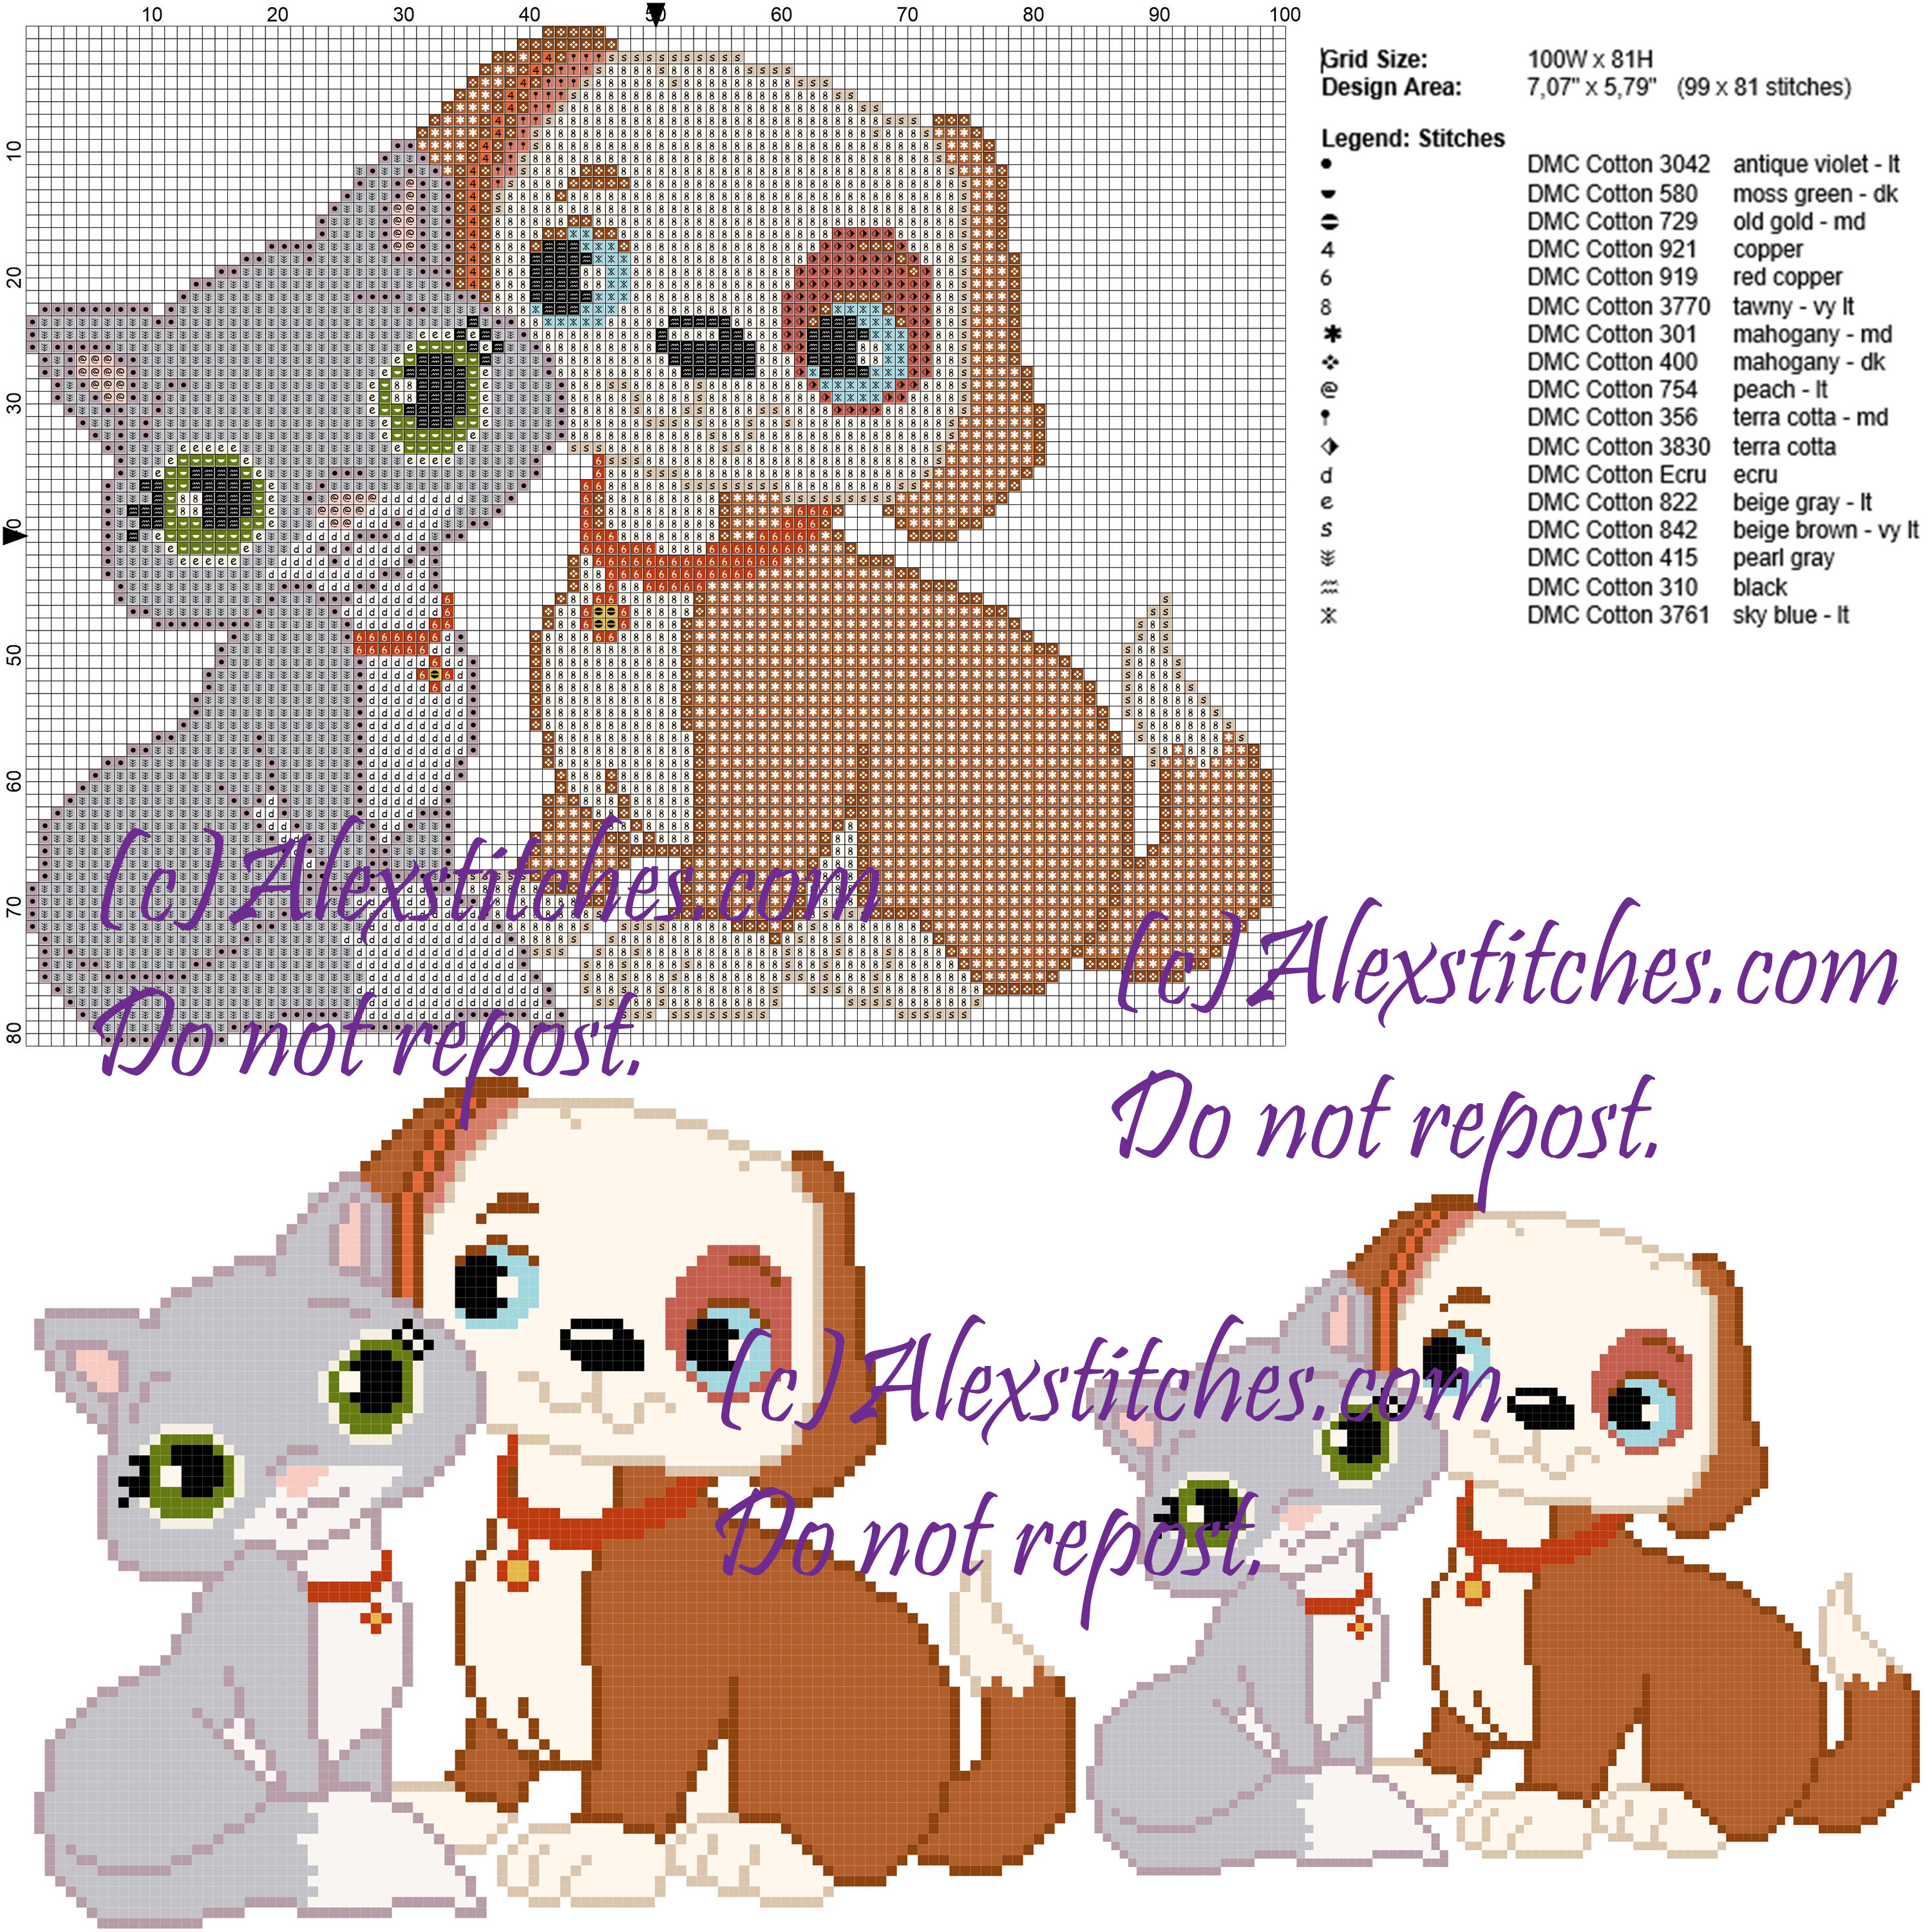 Cat and Dog friends cross stitch pattern 100x81 17 colors